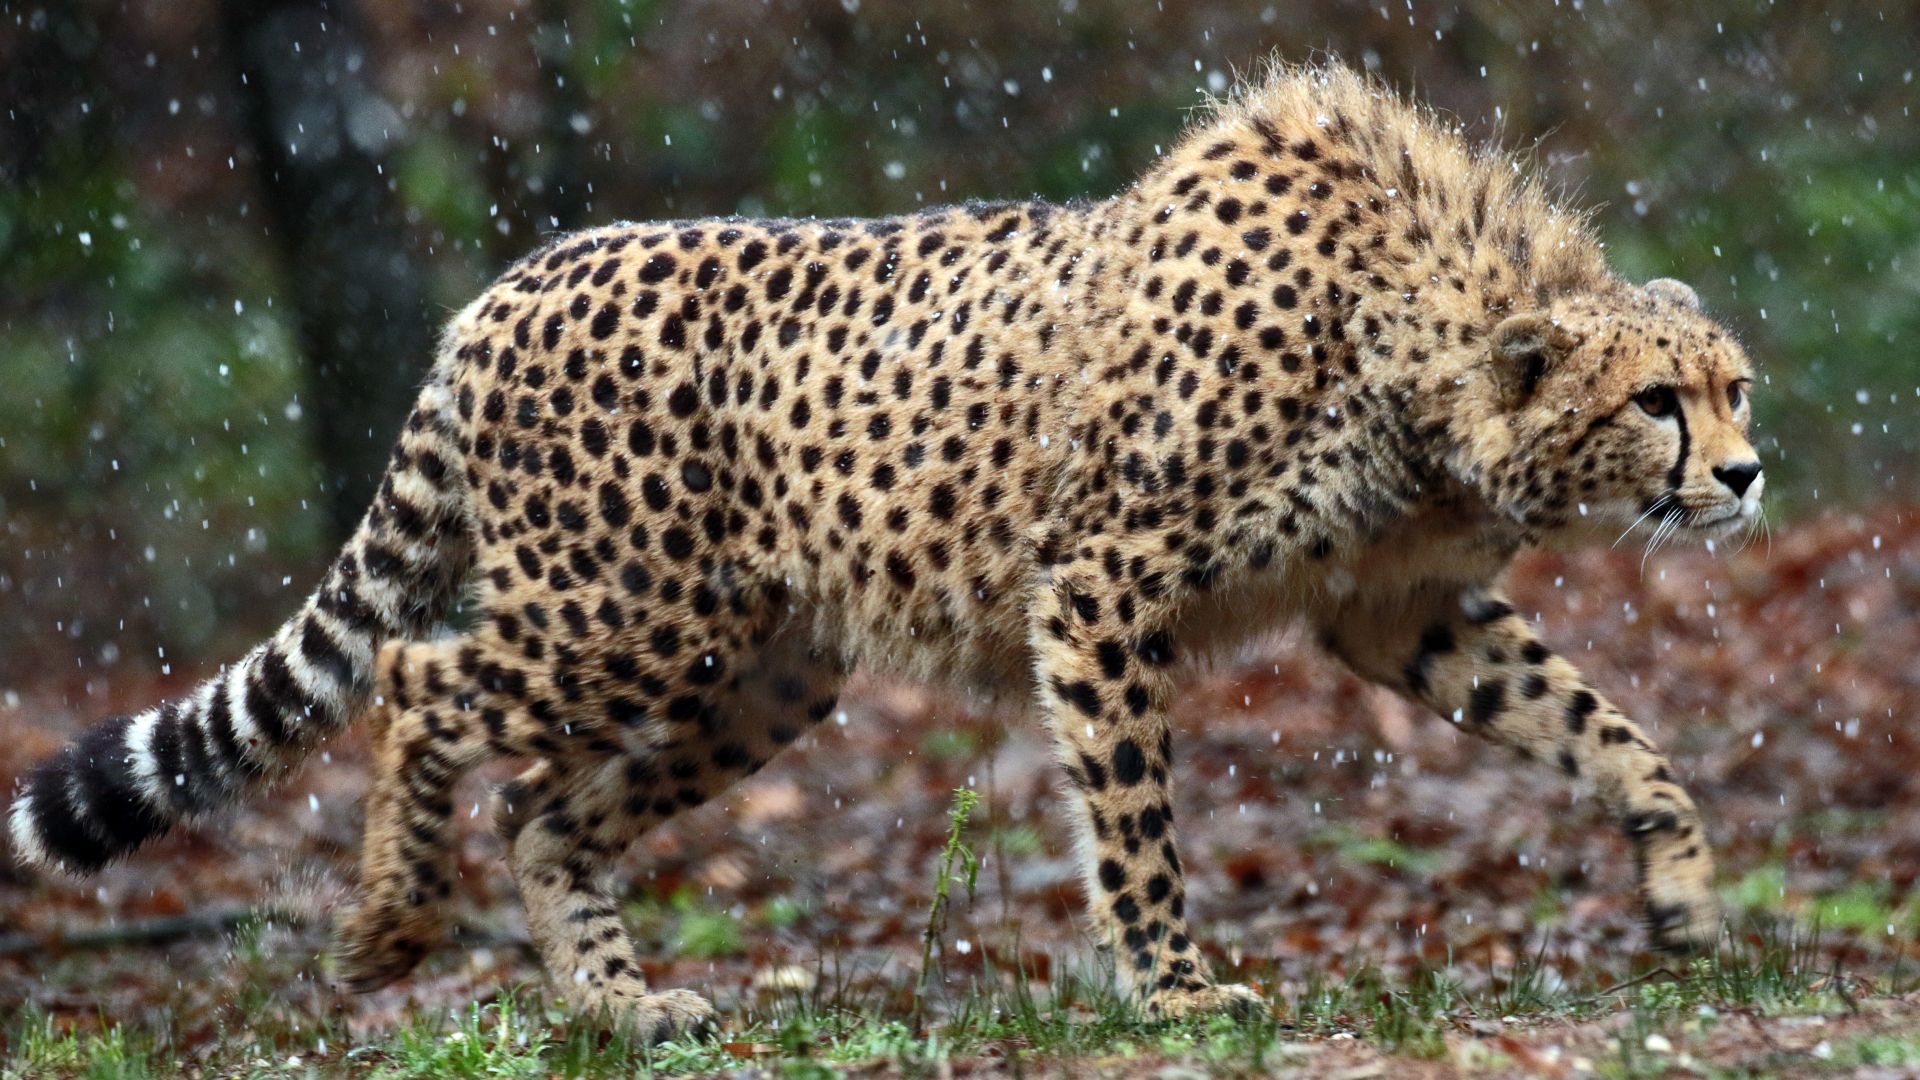 Desktop Wallpaper Cheetah Predator Animals Hd Image Picture Background Wntk J